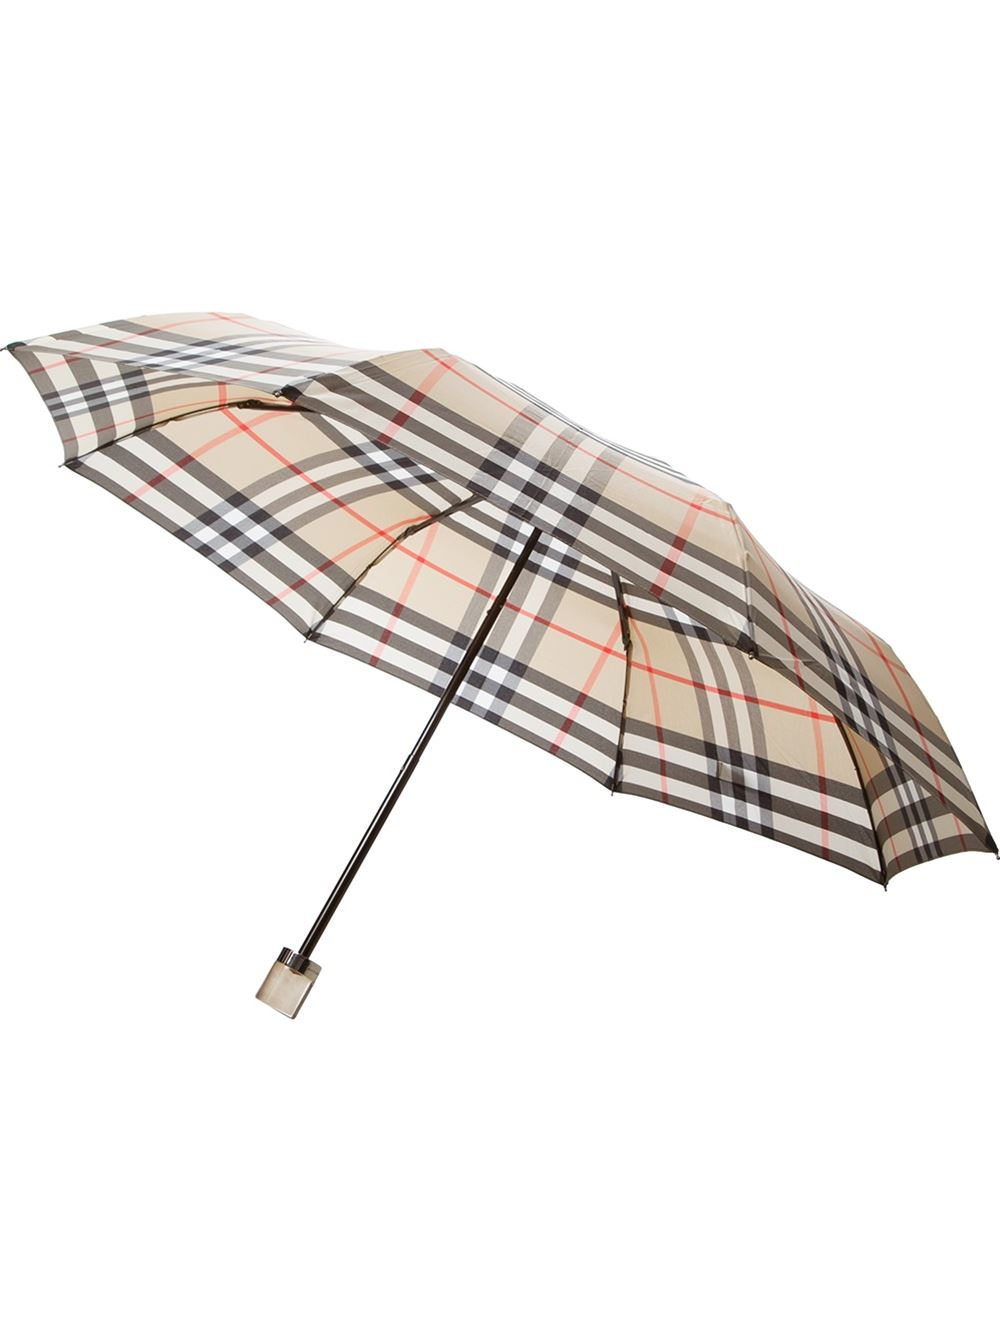 Womens Accessories Umbrellas Burberry Trafalgar Check Umbrella in Beige Natural 